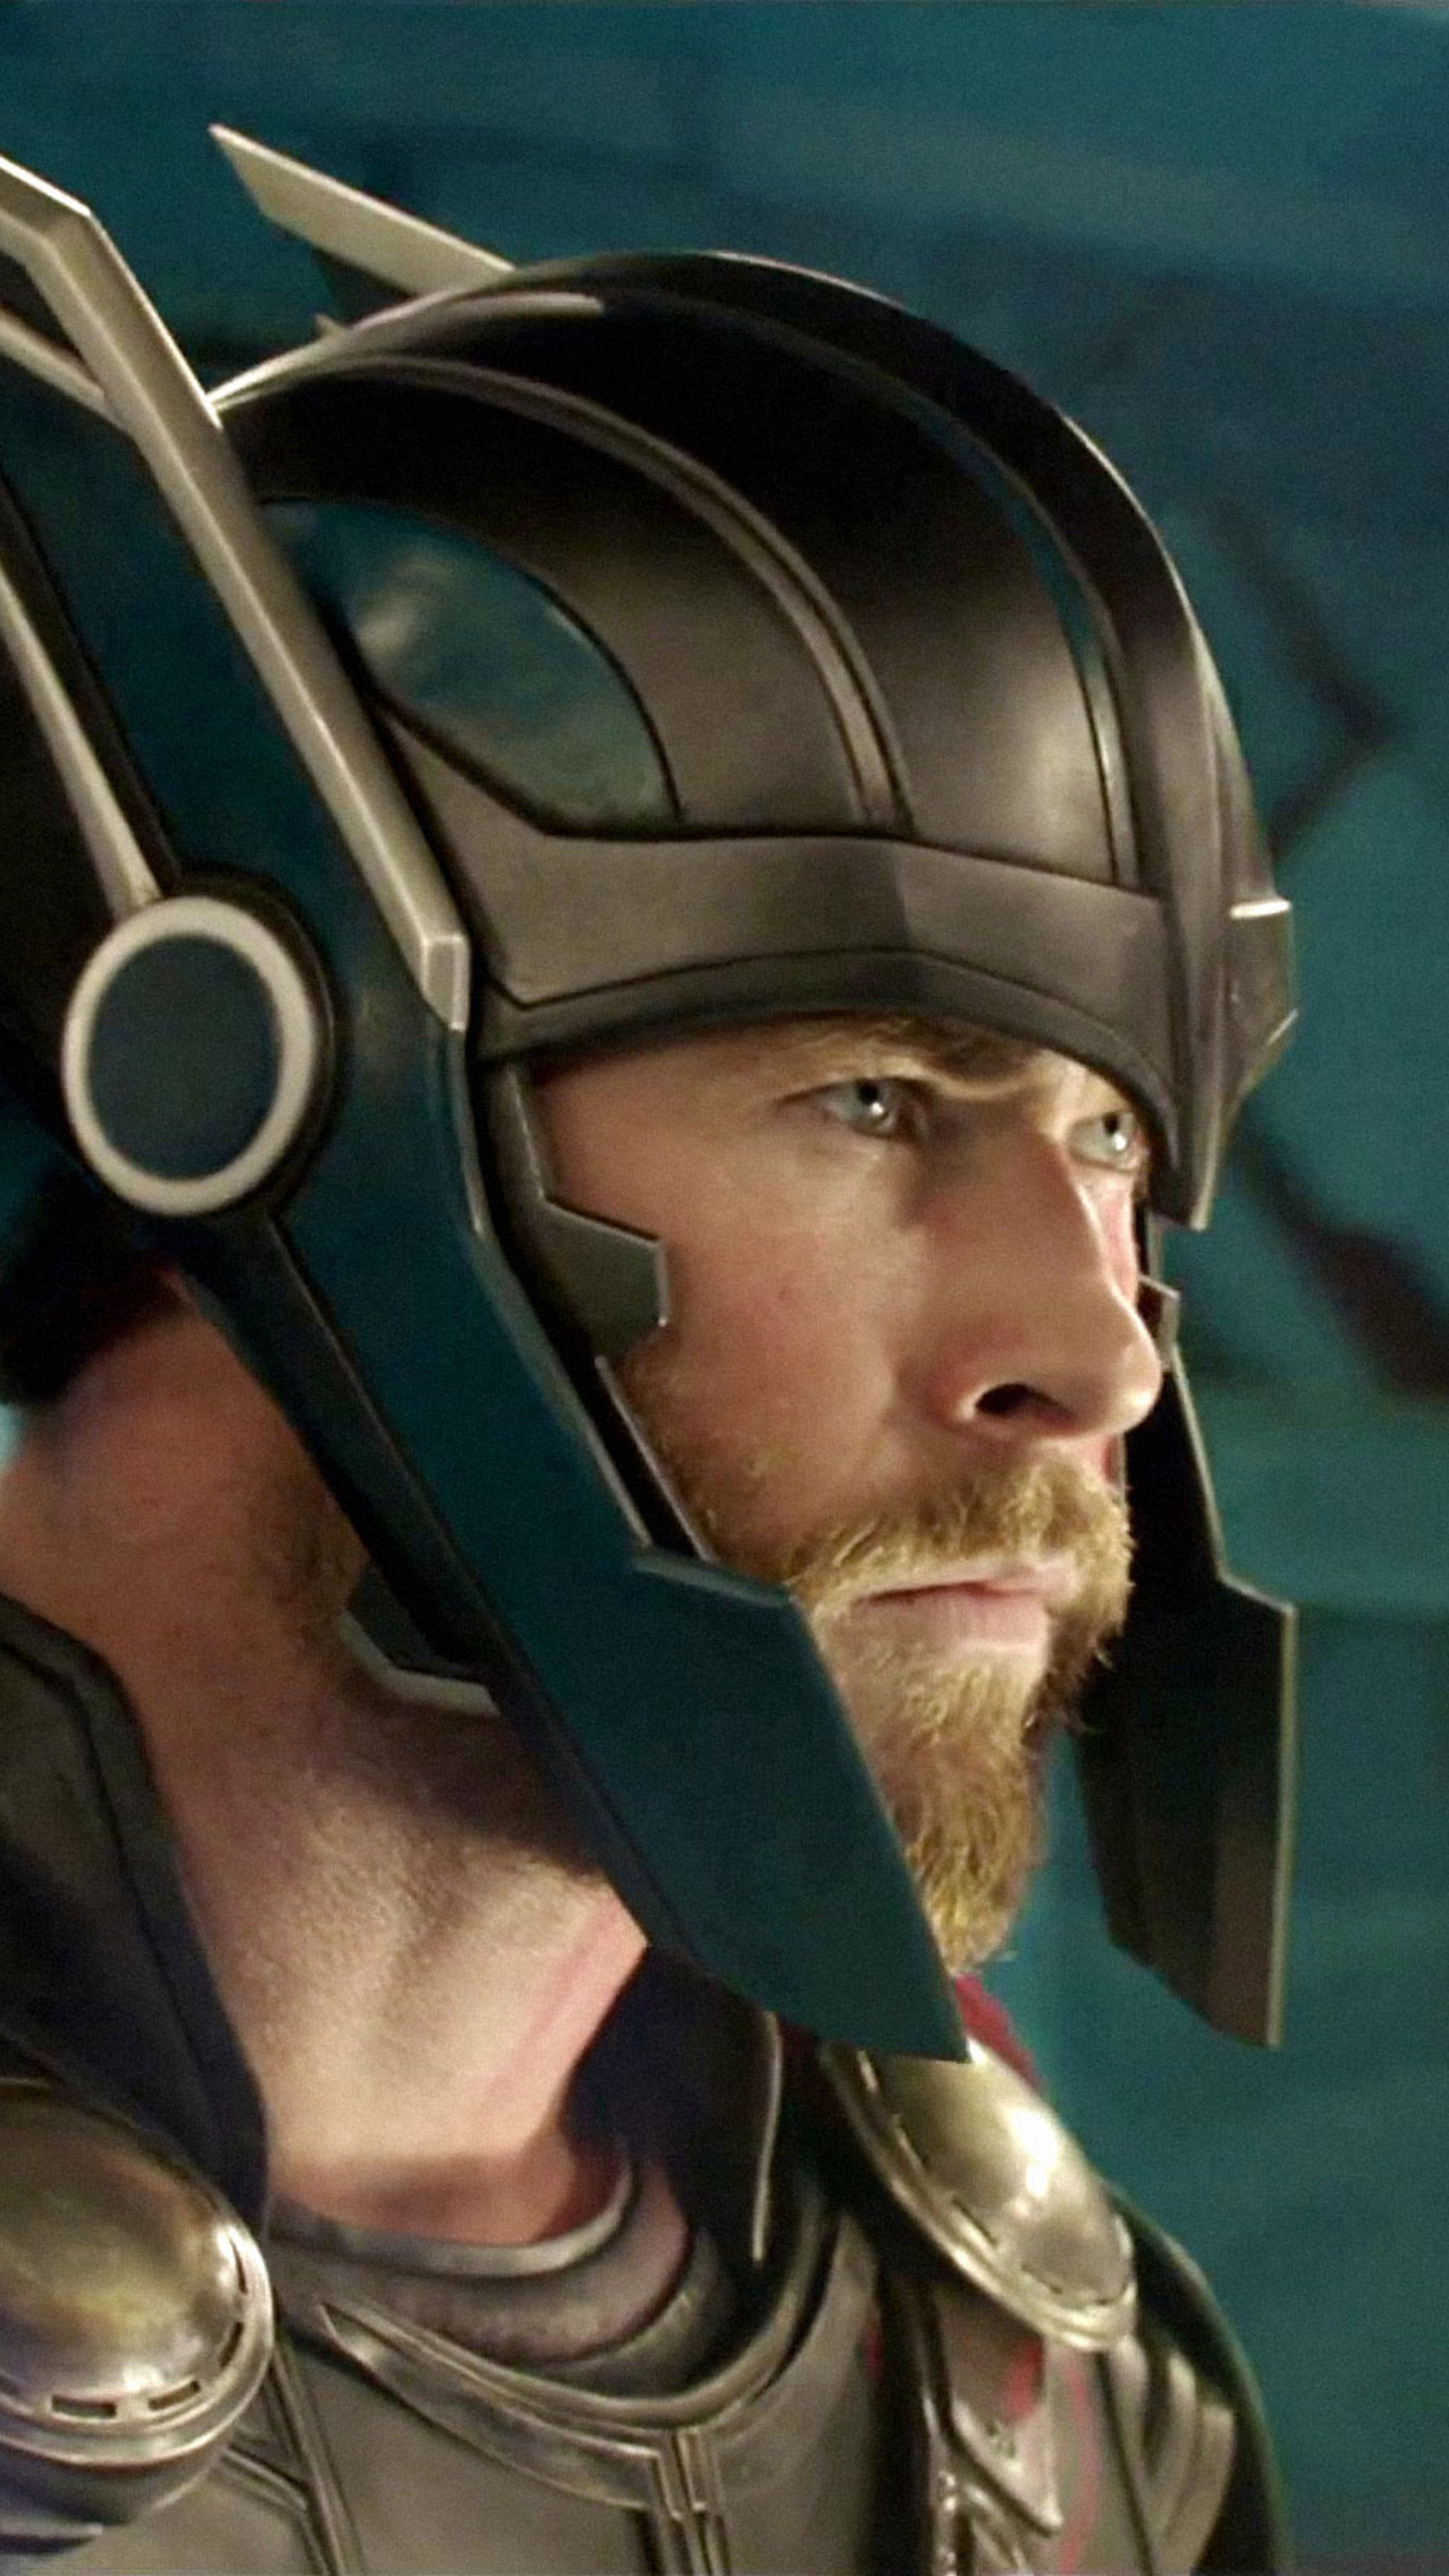 Chris Hemsworth: Thor, An Avenger and the crown prince of Asgard, Ragnarok. 2160x3840 4K Wallpaper.